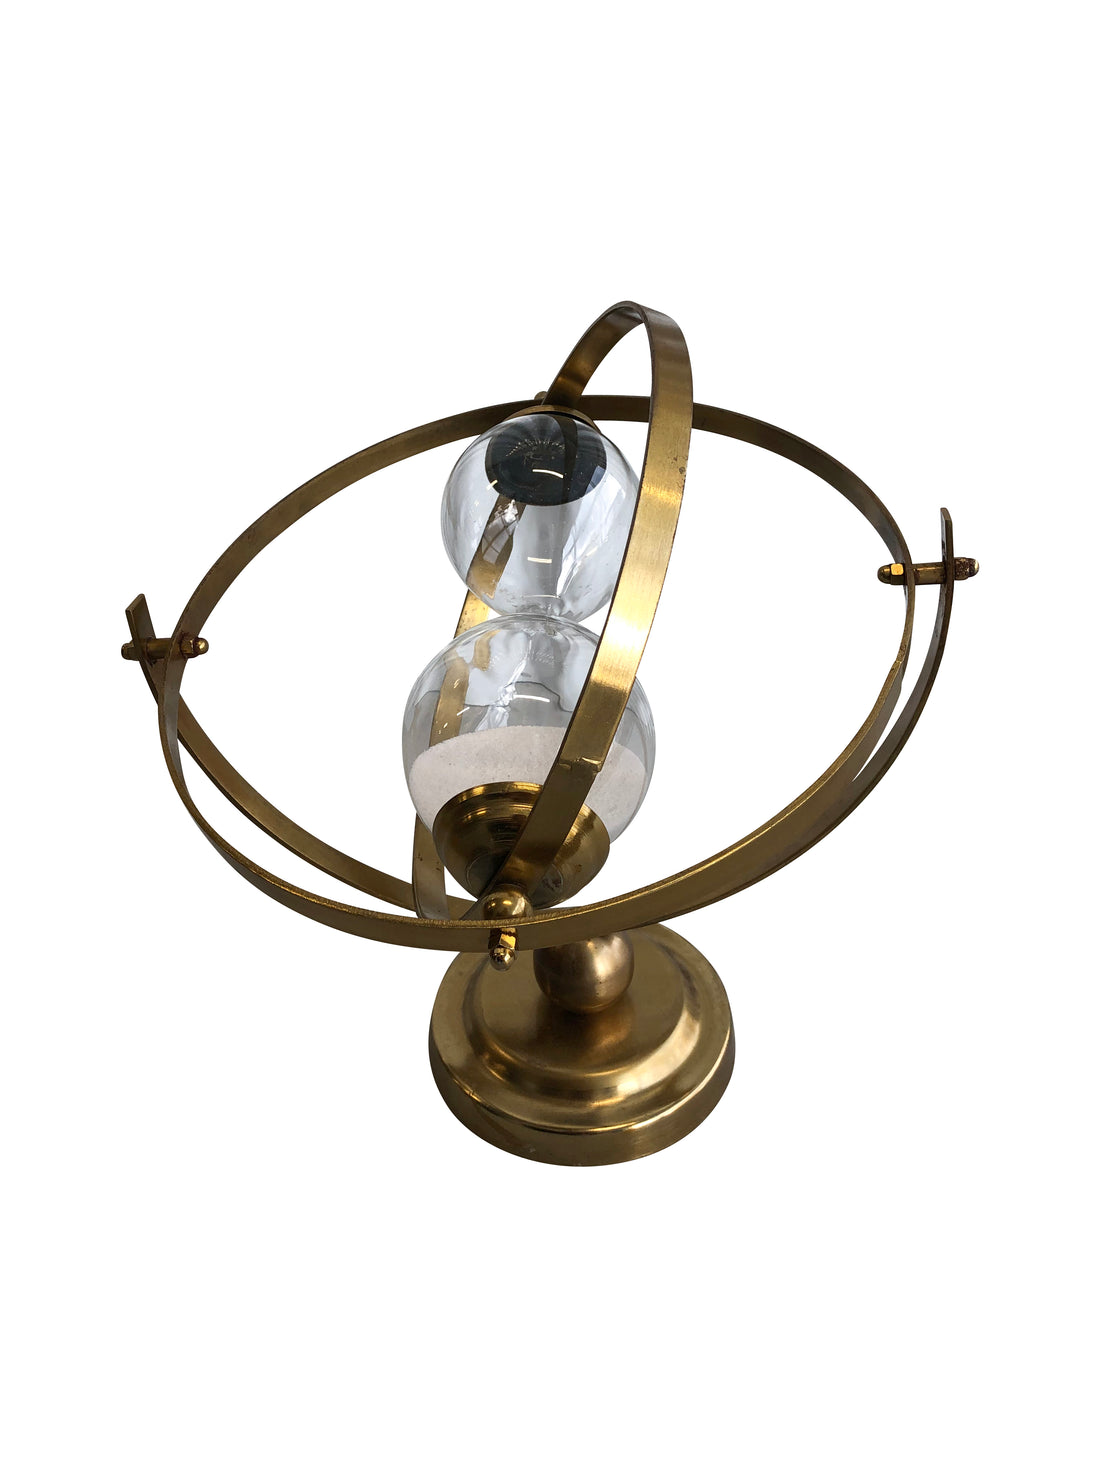 Armillary Sphere Hourglass